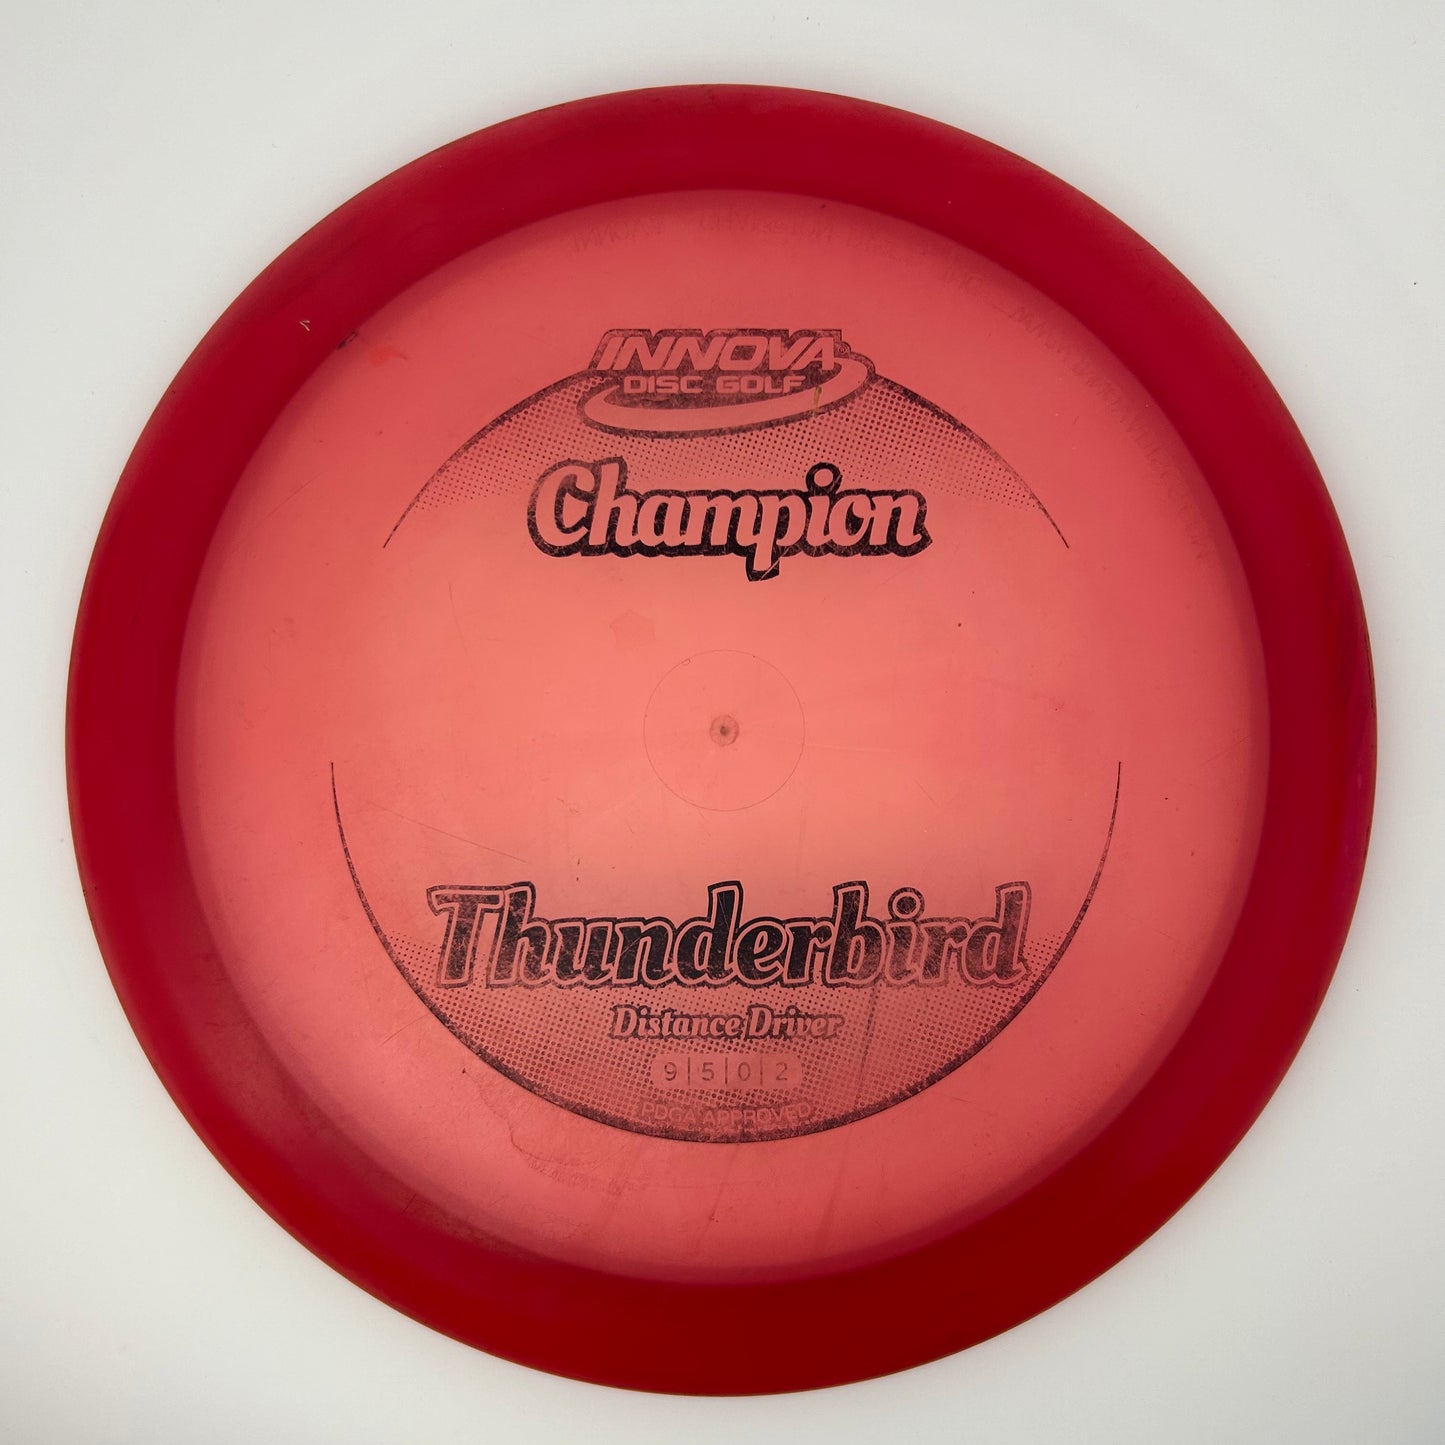 USED - Thunderbird